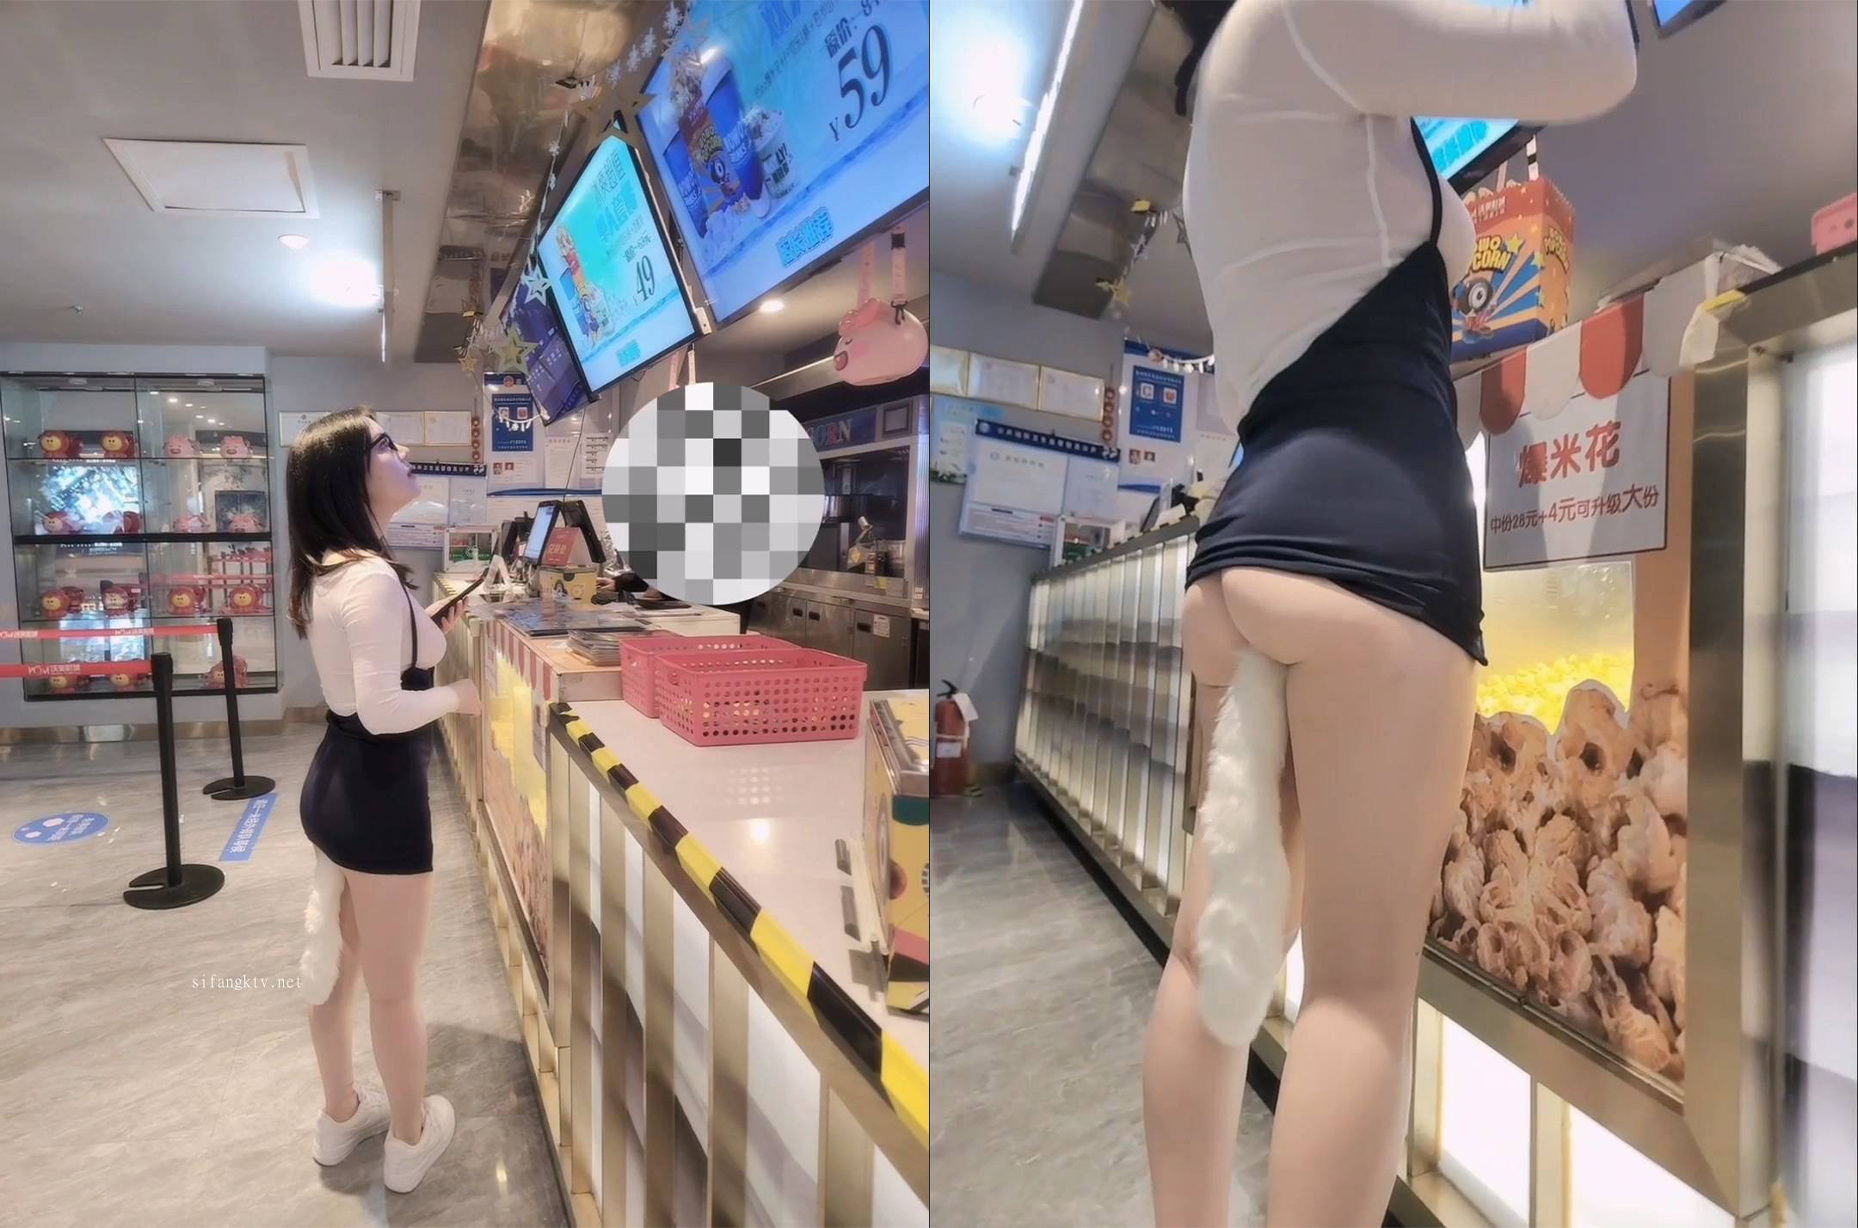 Show people goddess [Douban sauce] anal plugs tail dew B short skirt movie theater exposure